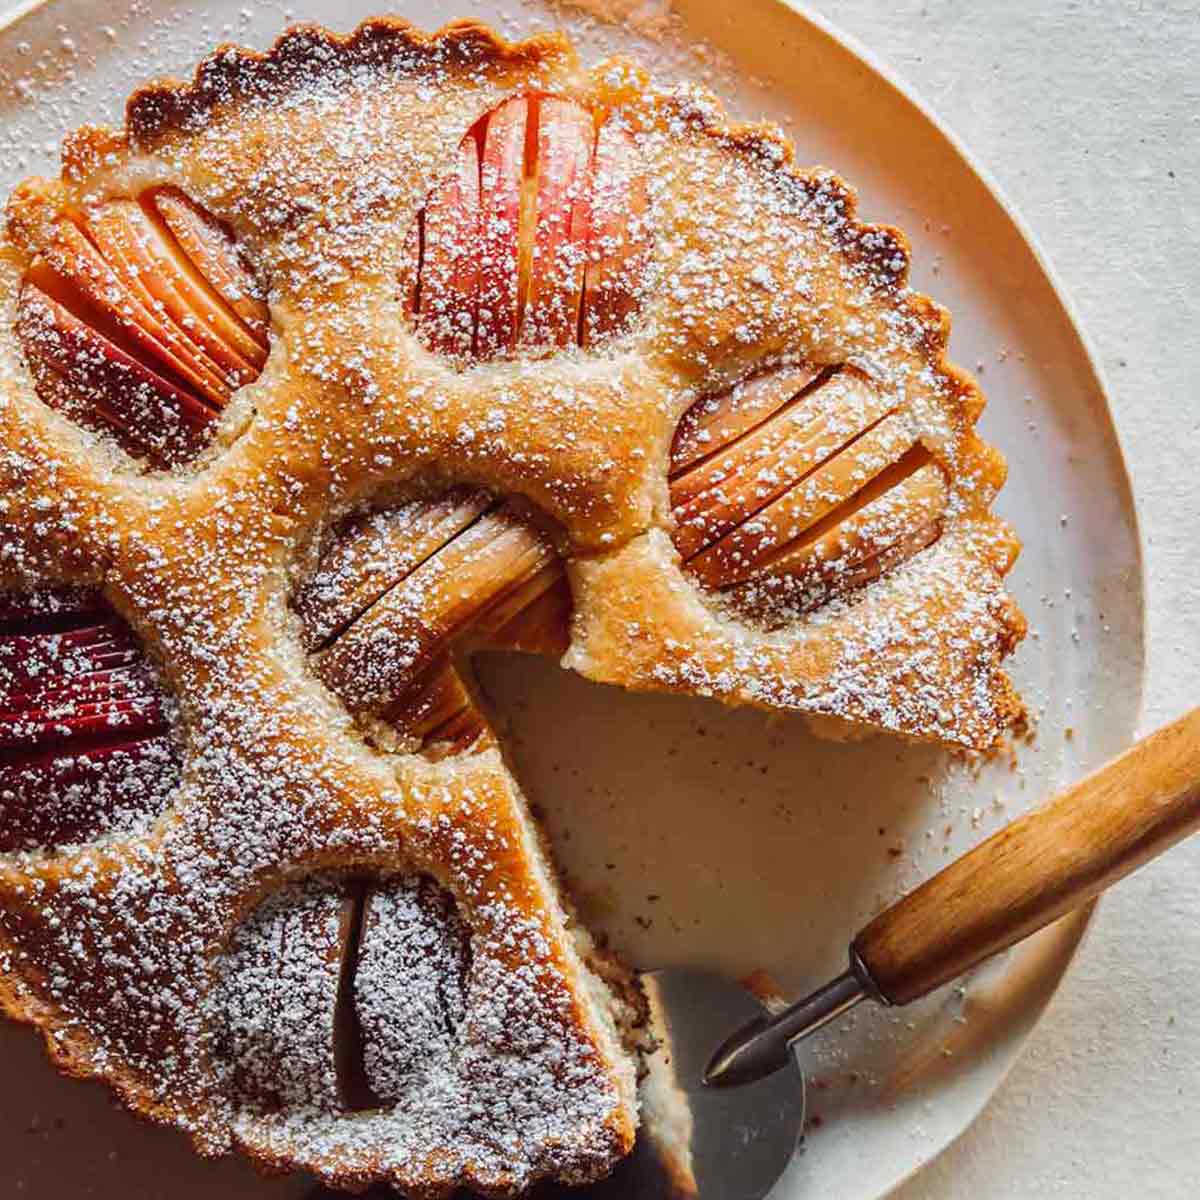 The Hungry Hounds— Apple Walnut Bundt Cake with Caramel Glaze